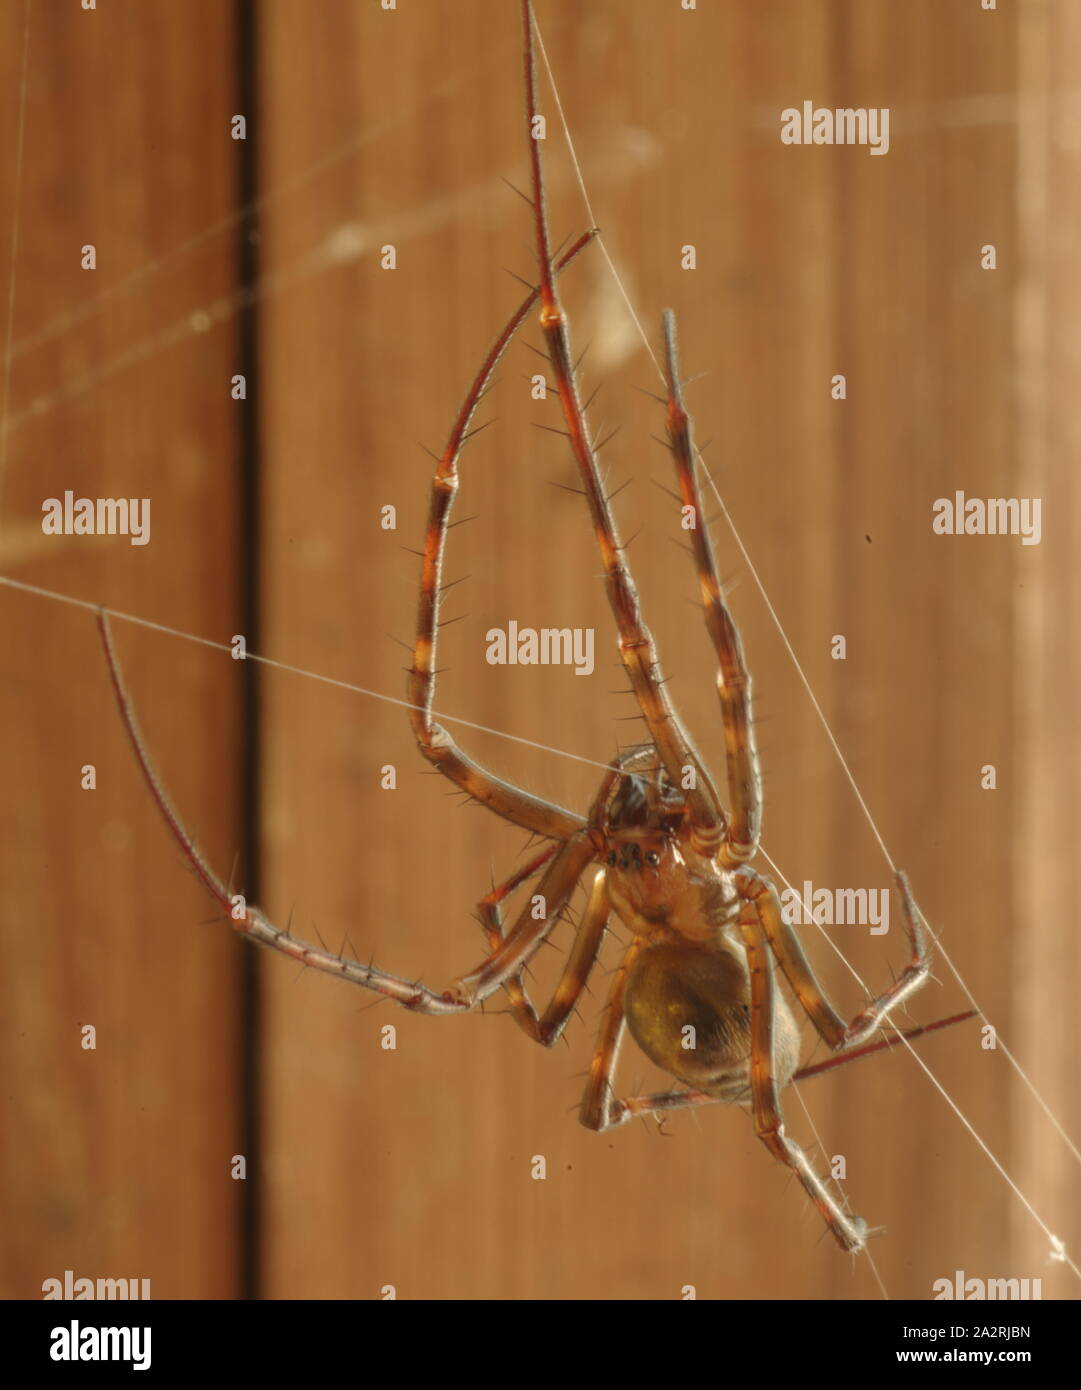 Spider in Norwegian cellar Stock Photo